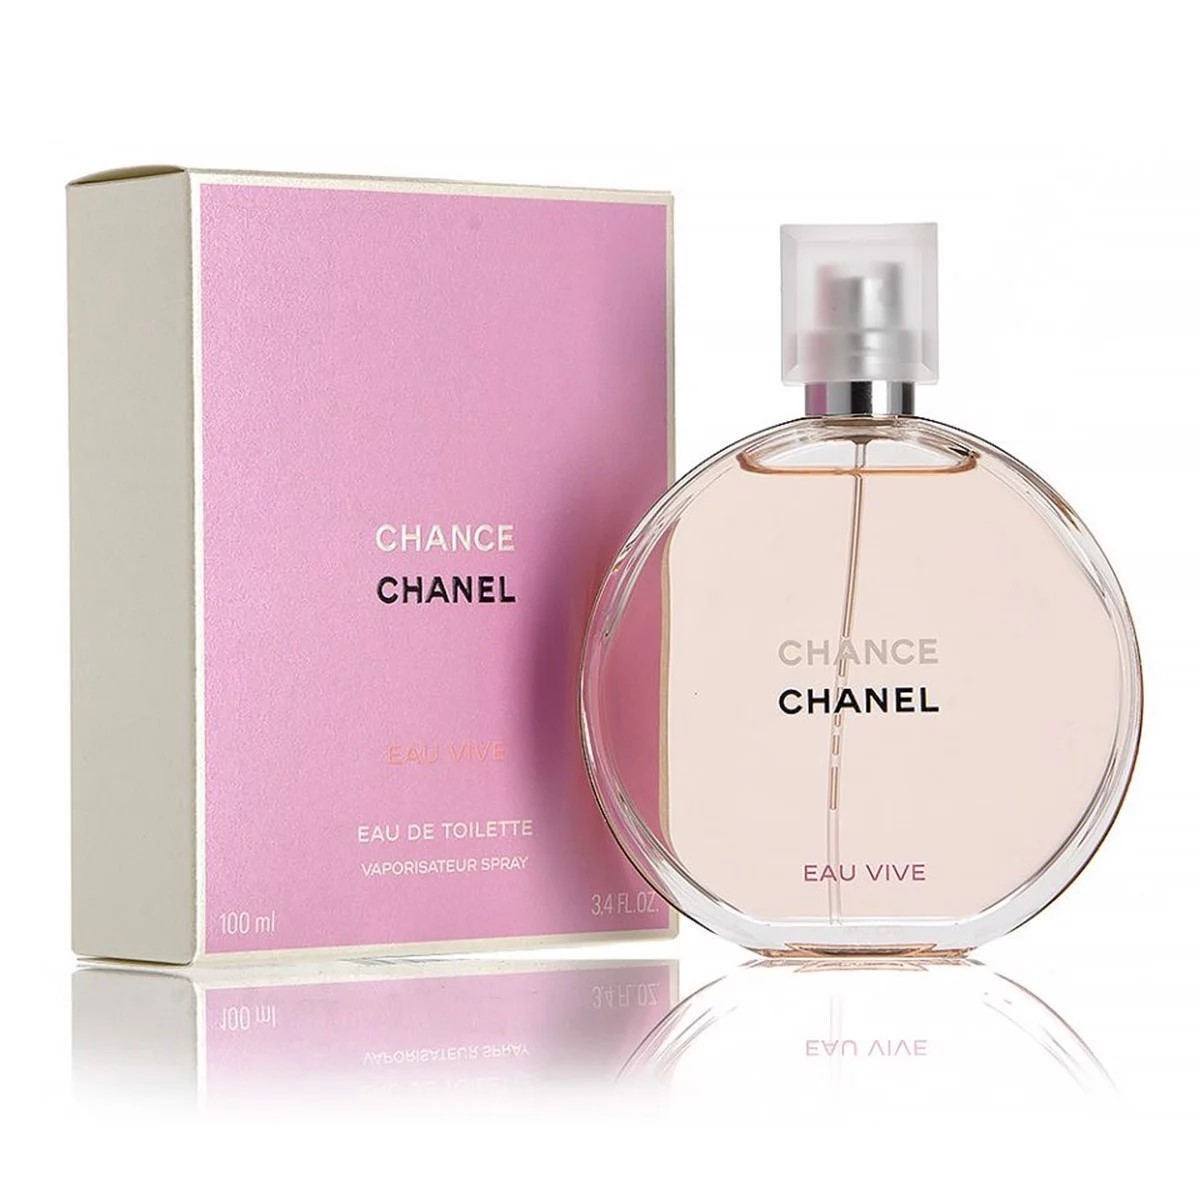 Set Nước Hoa Chanel Bleu De Chanel Parfum 3x20ML  Thế Giới Son Môi